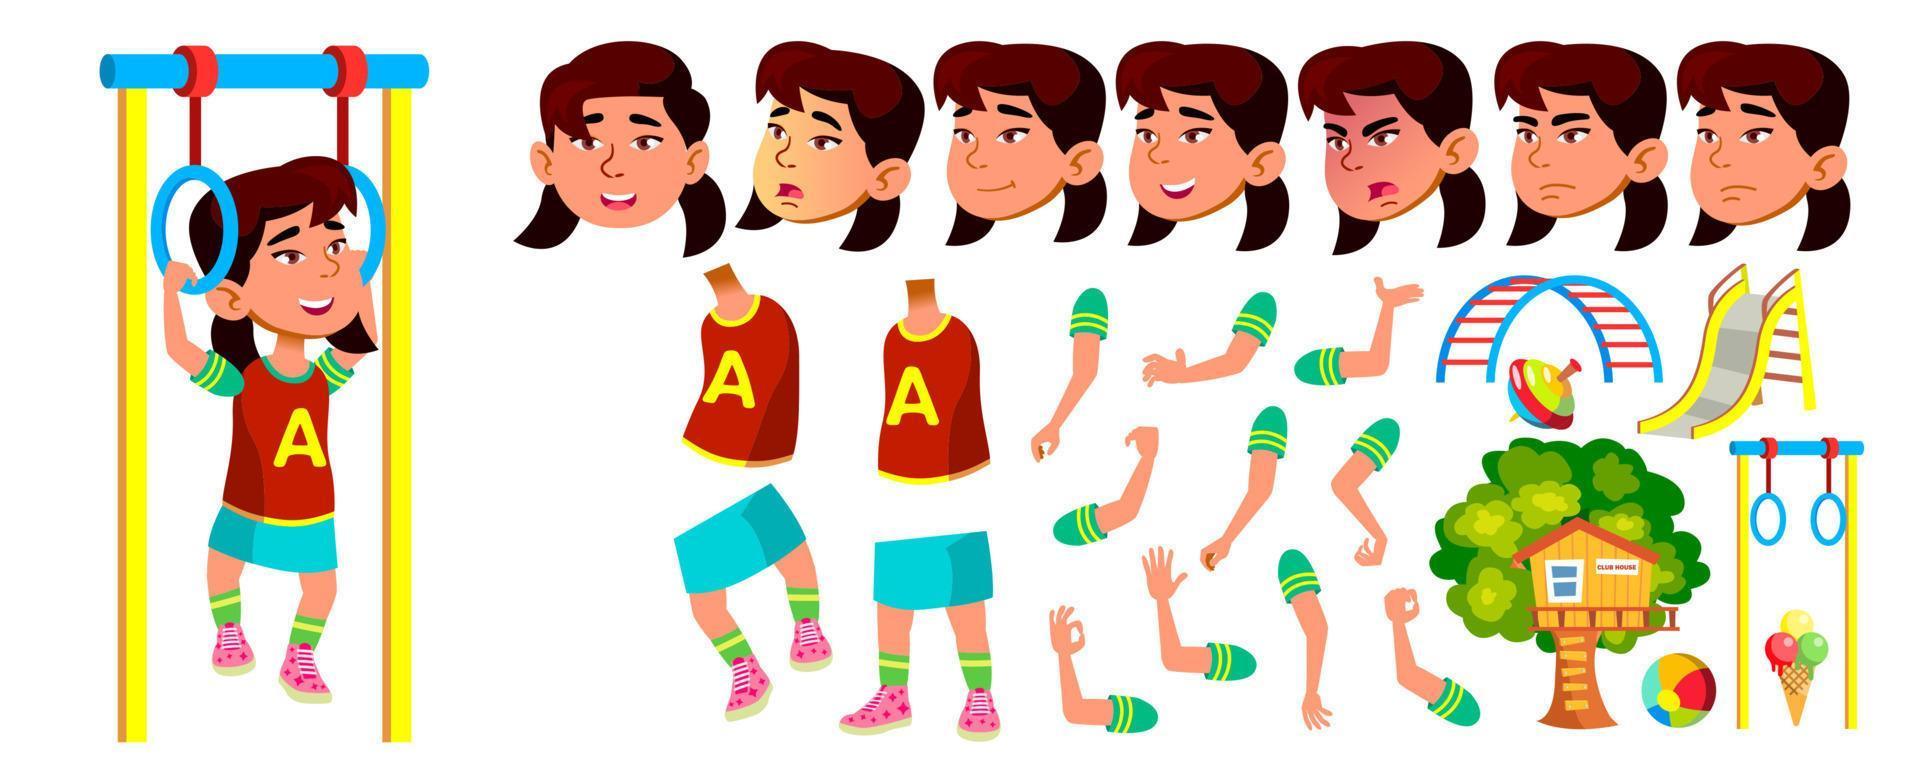 Asian Girl Kindergarten Kid Vector. Animation Creation Set. Face Emotions, Gestures. Little Children. Happiness Enjoyment. For Presentation, Invitation, Card Design. Animated. Cartoon Illustration vector